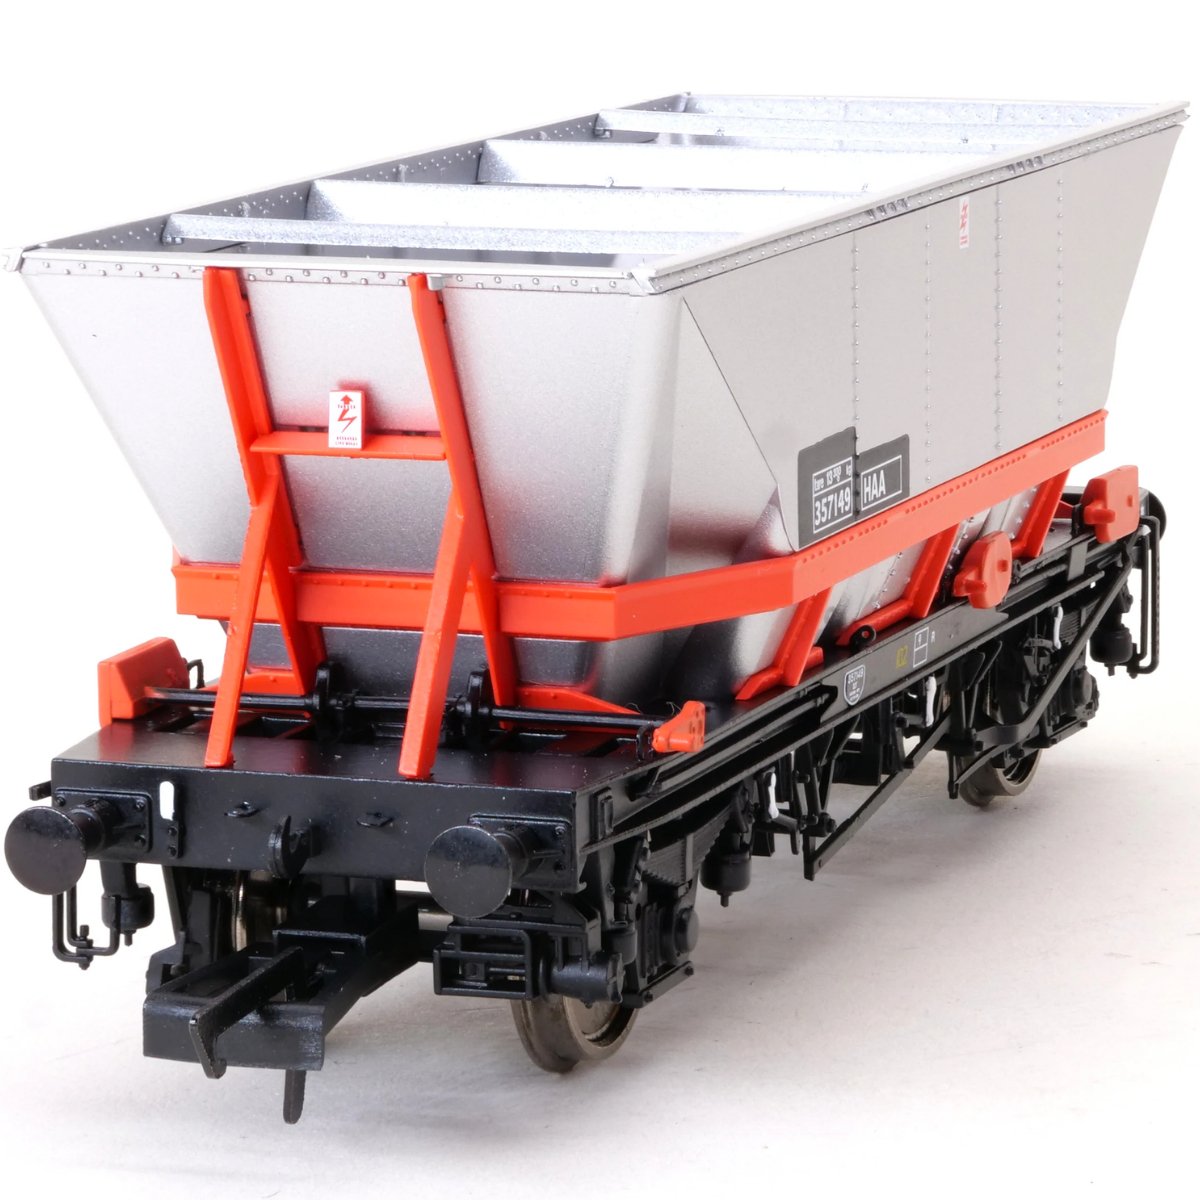 Accurascale HAA Coal Hopper Wagon Set (3) Railfreight Red - Pack 1 - Phillips Hobbies